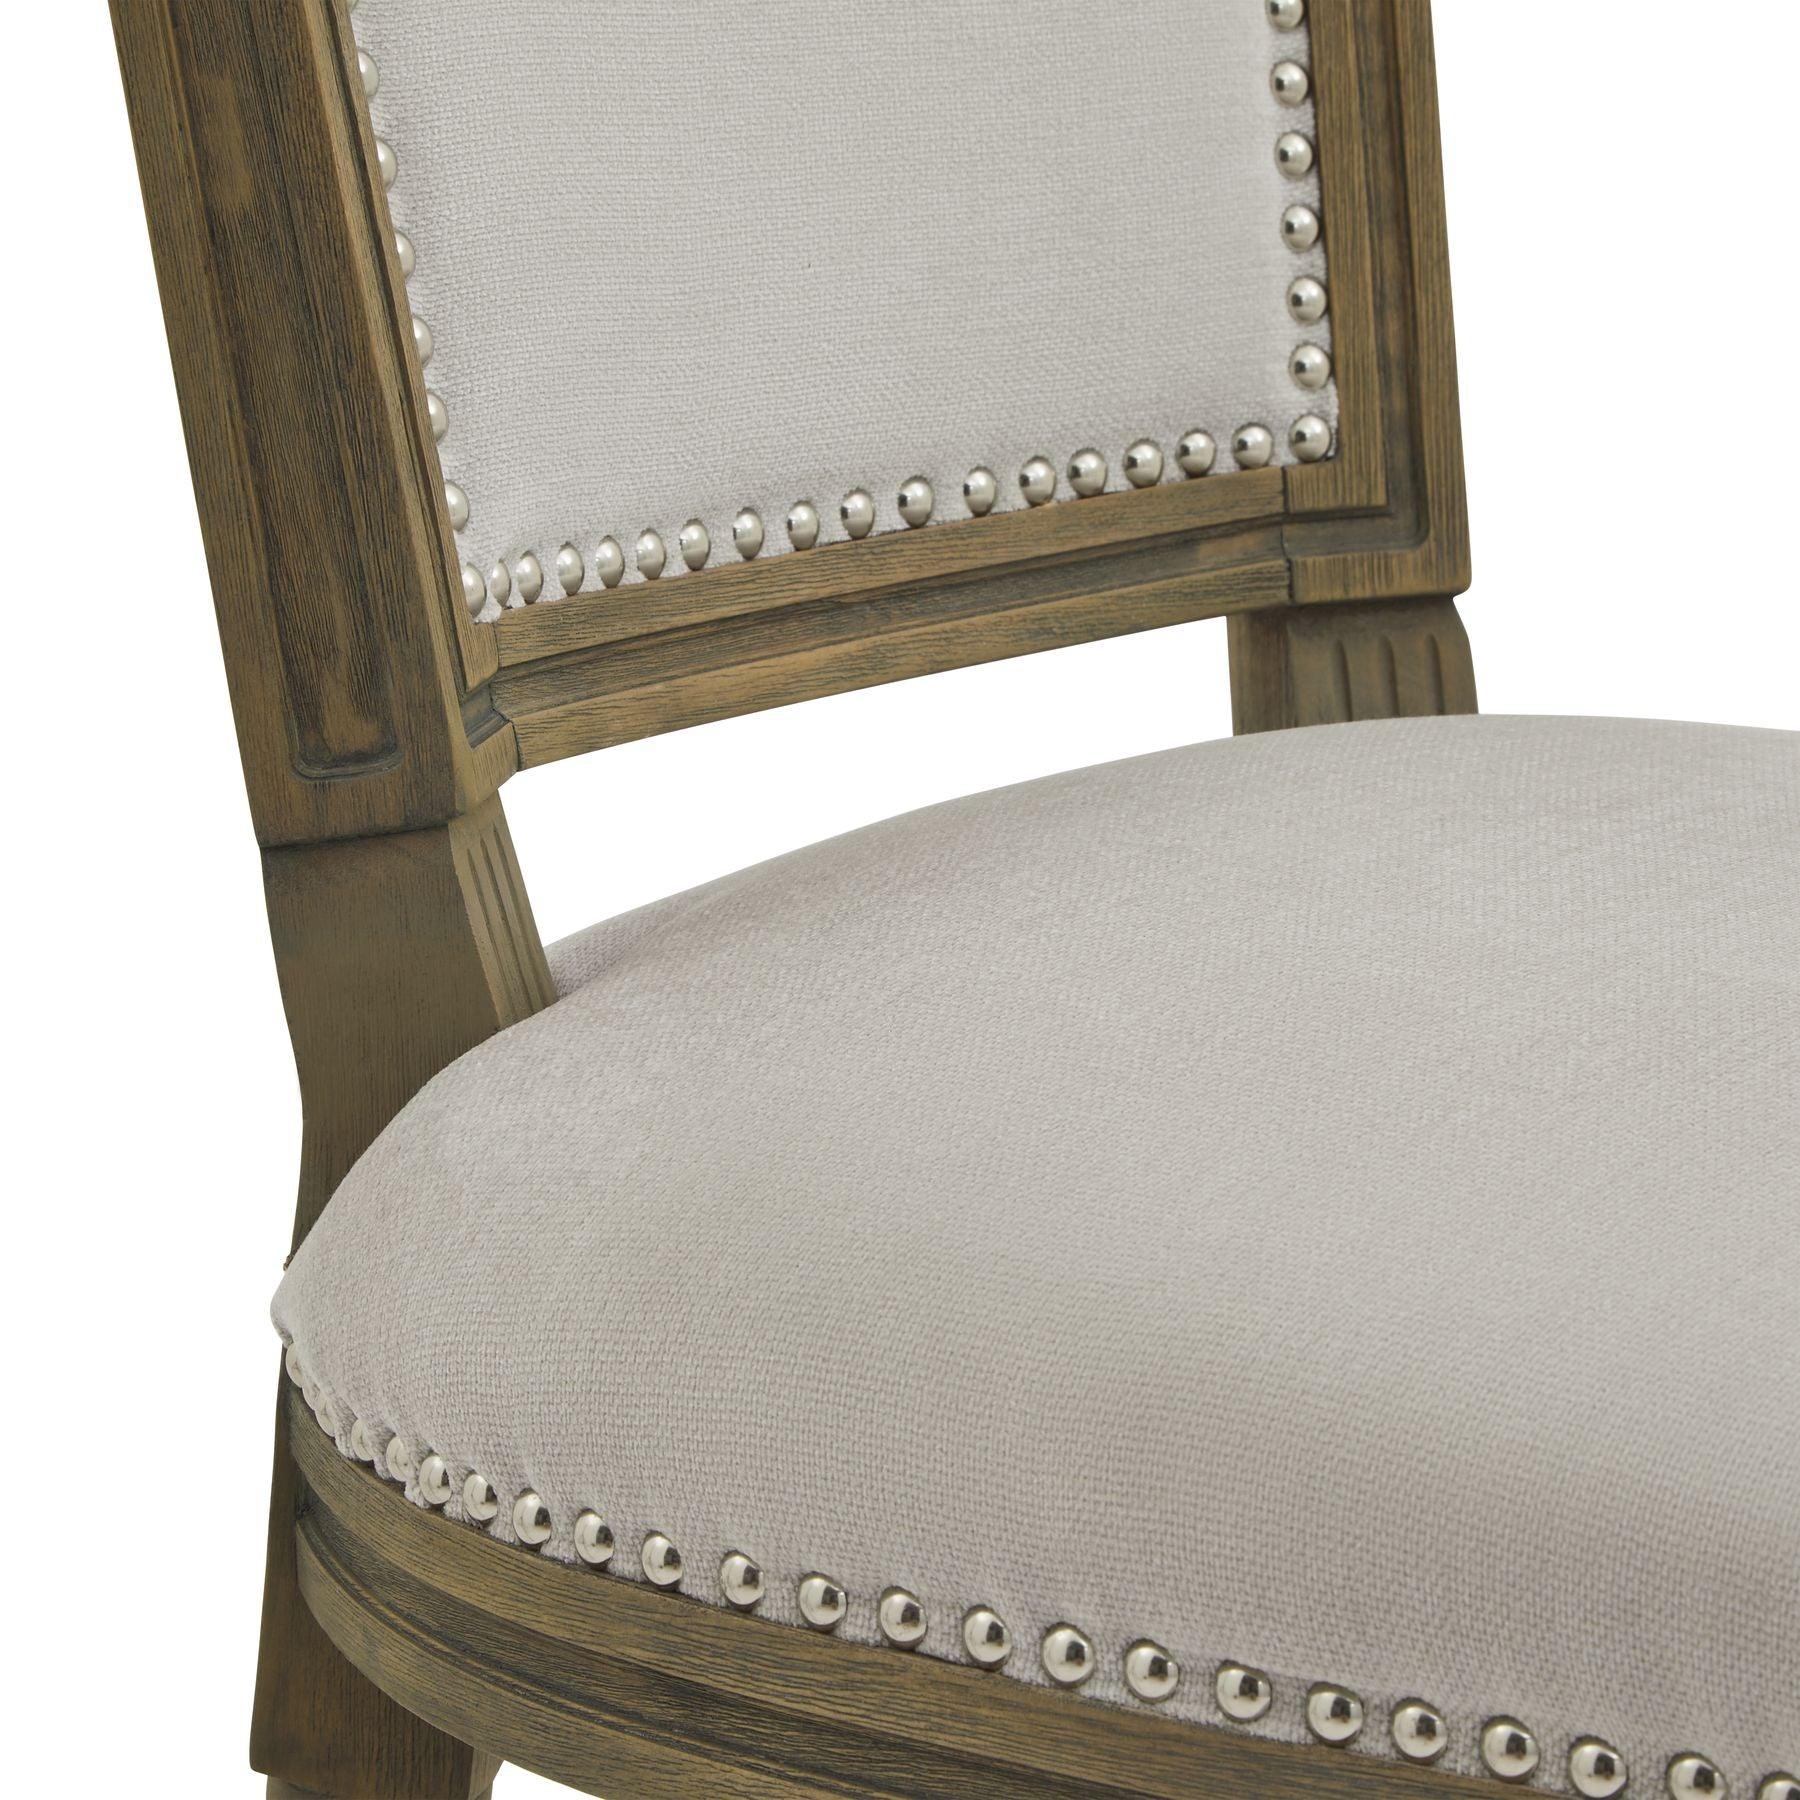 Ripley Grey Dining Chair - Abode Decor